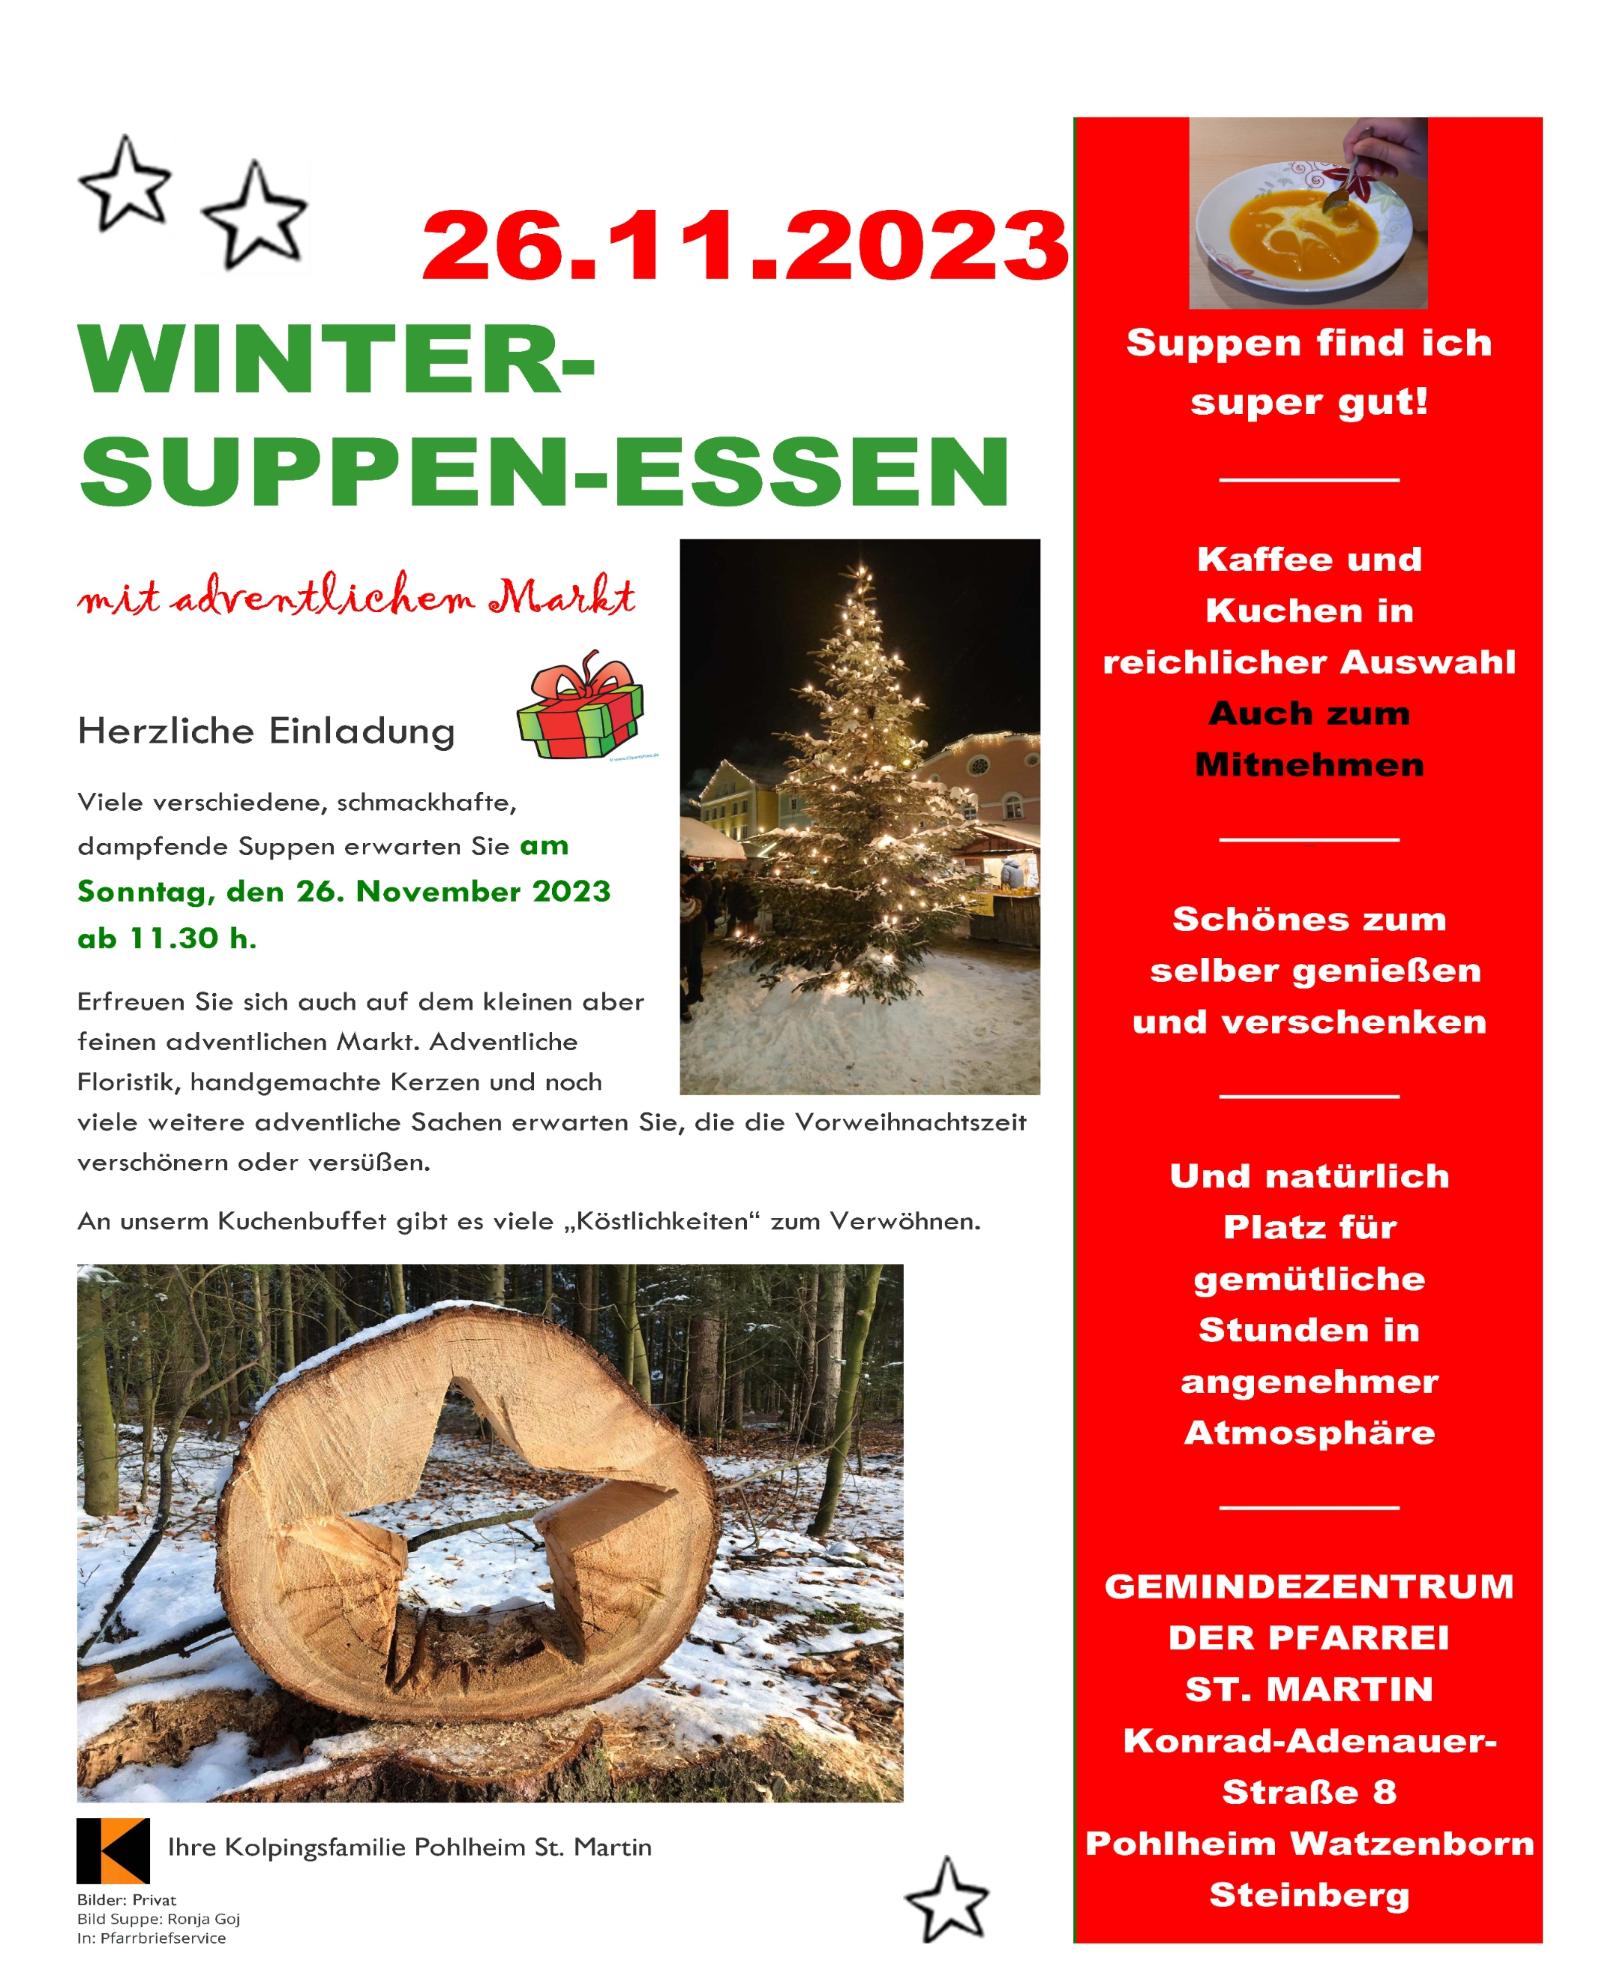 Winter-Suppen-Essen 2023 (c) Kolpingsfamilie St. Martin Pohlheim